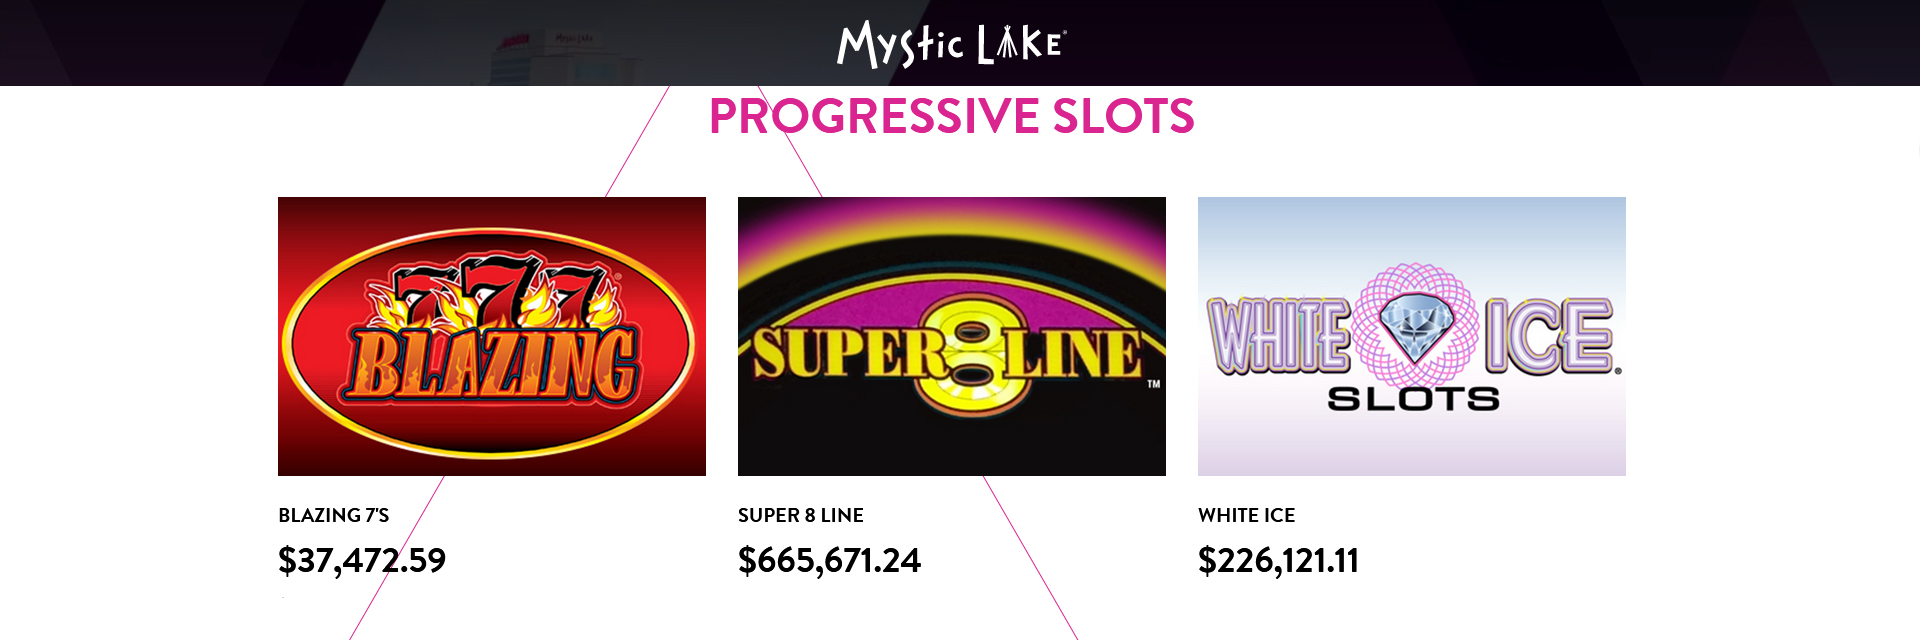 Mystic Lake casino slots. 